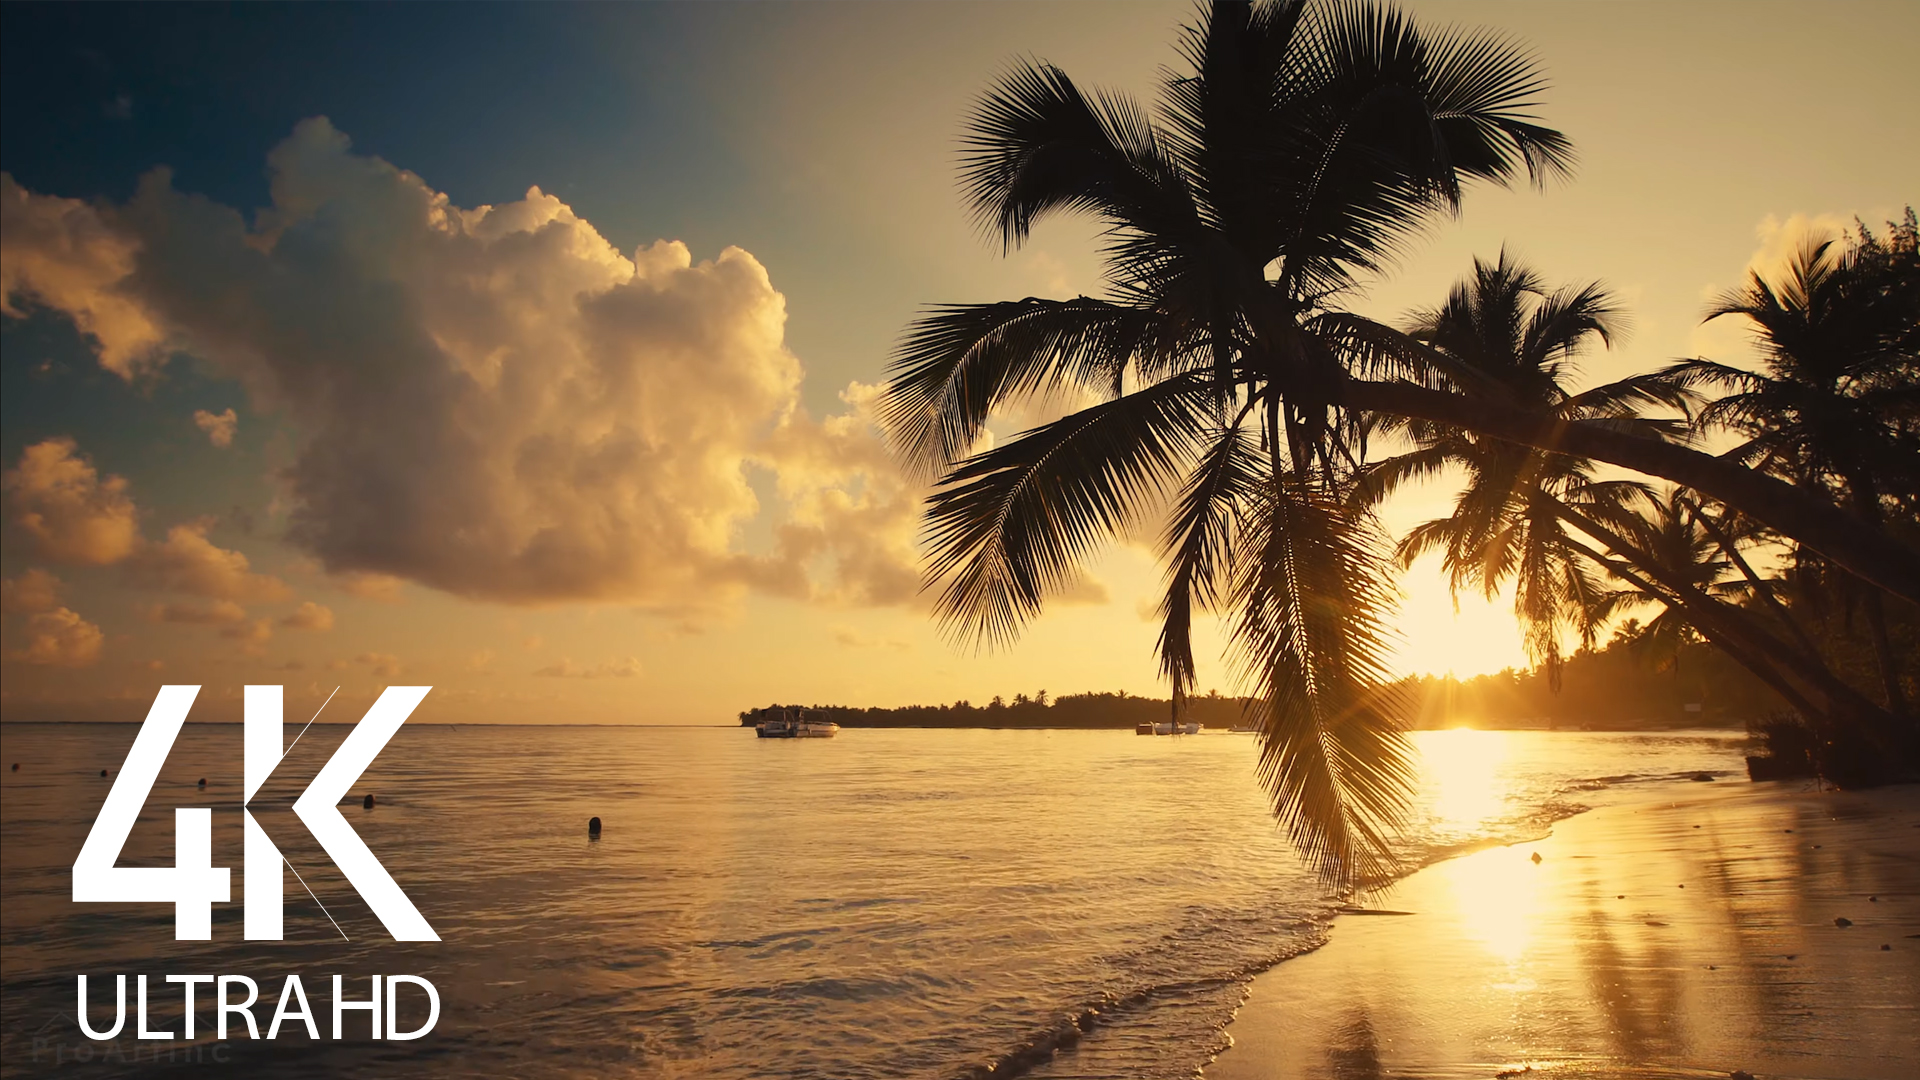 4k Tropical Sunrise On The Beach With Palms Calm Ocean Waves Sounds